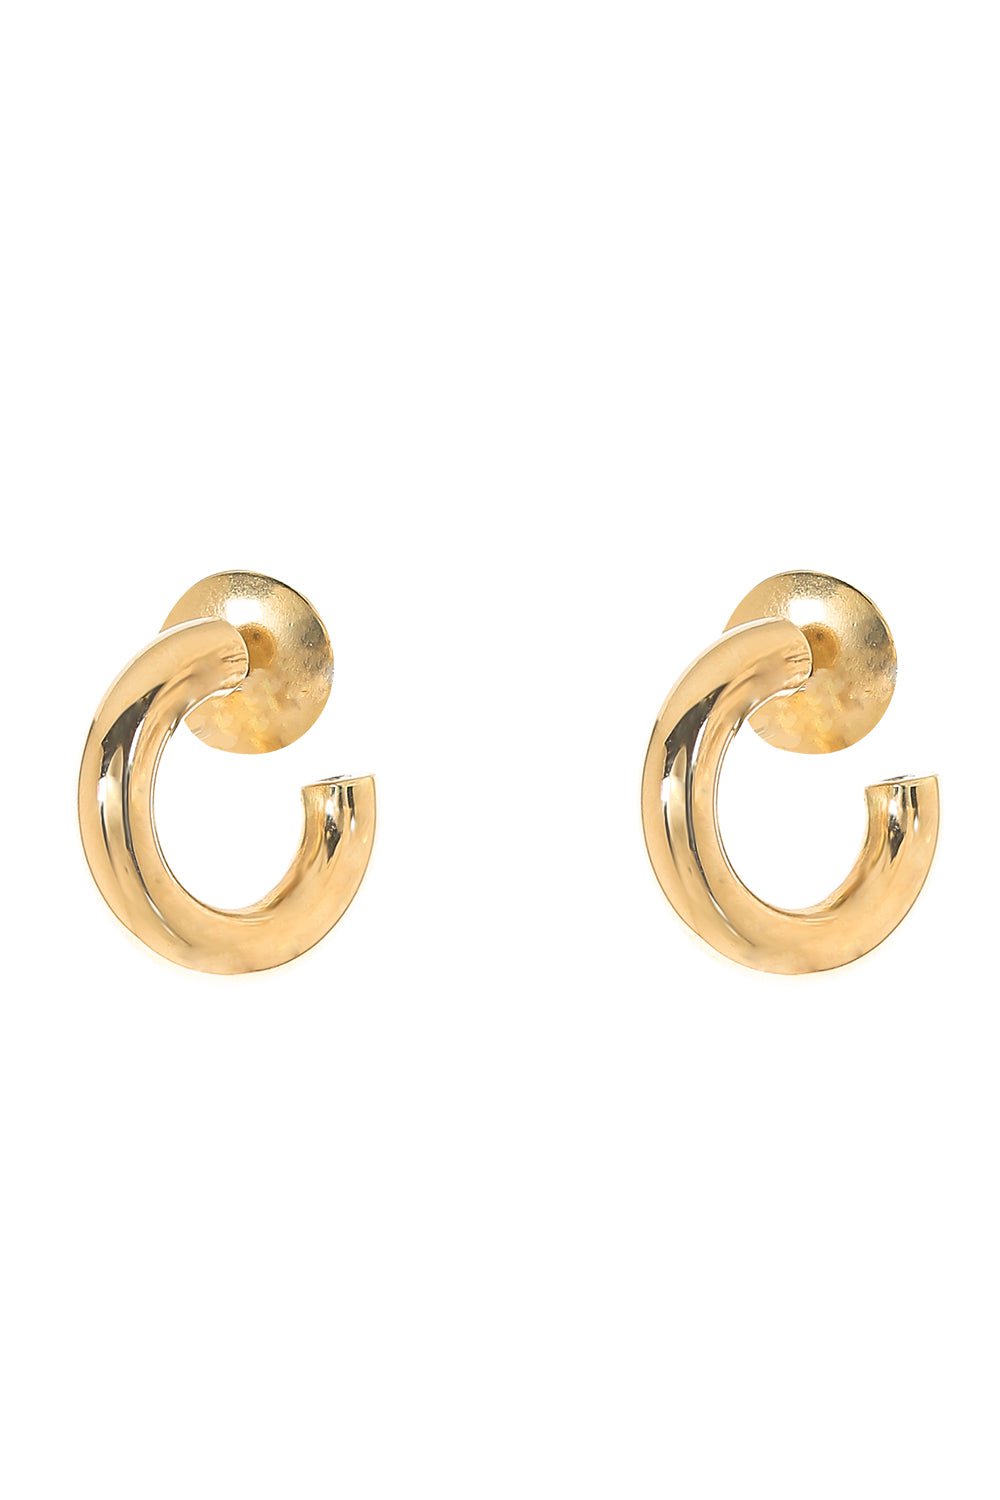 SIDNEY GARBER-Mallory Hoop Earrings - 1.8cm-YELLOW GOLD